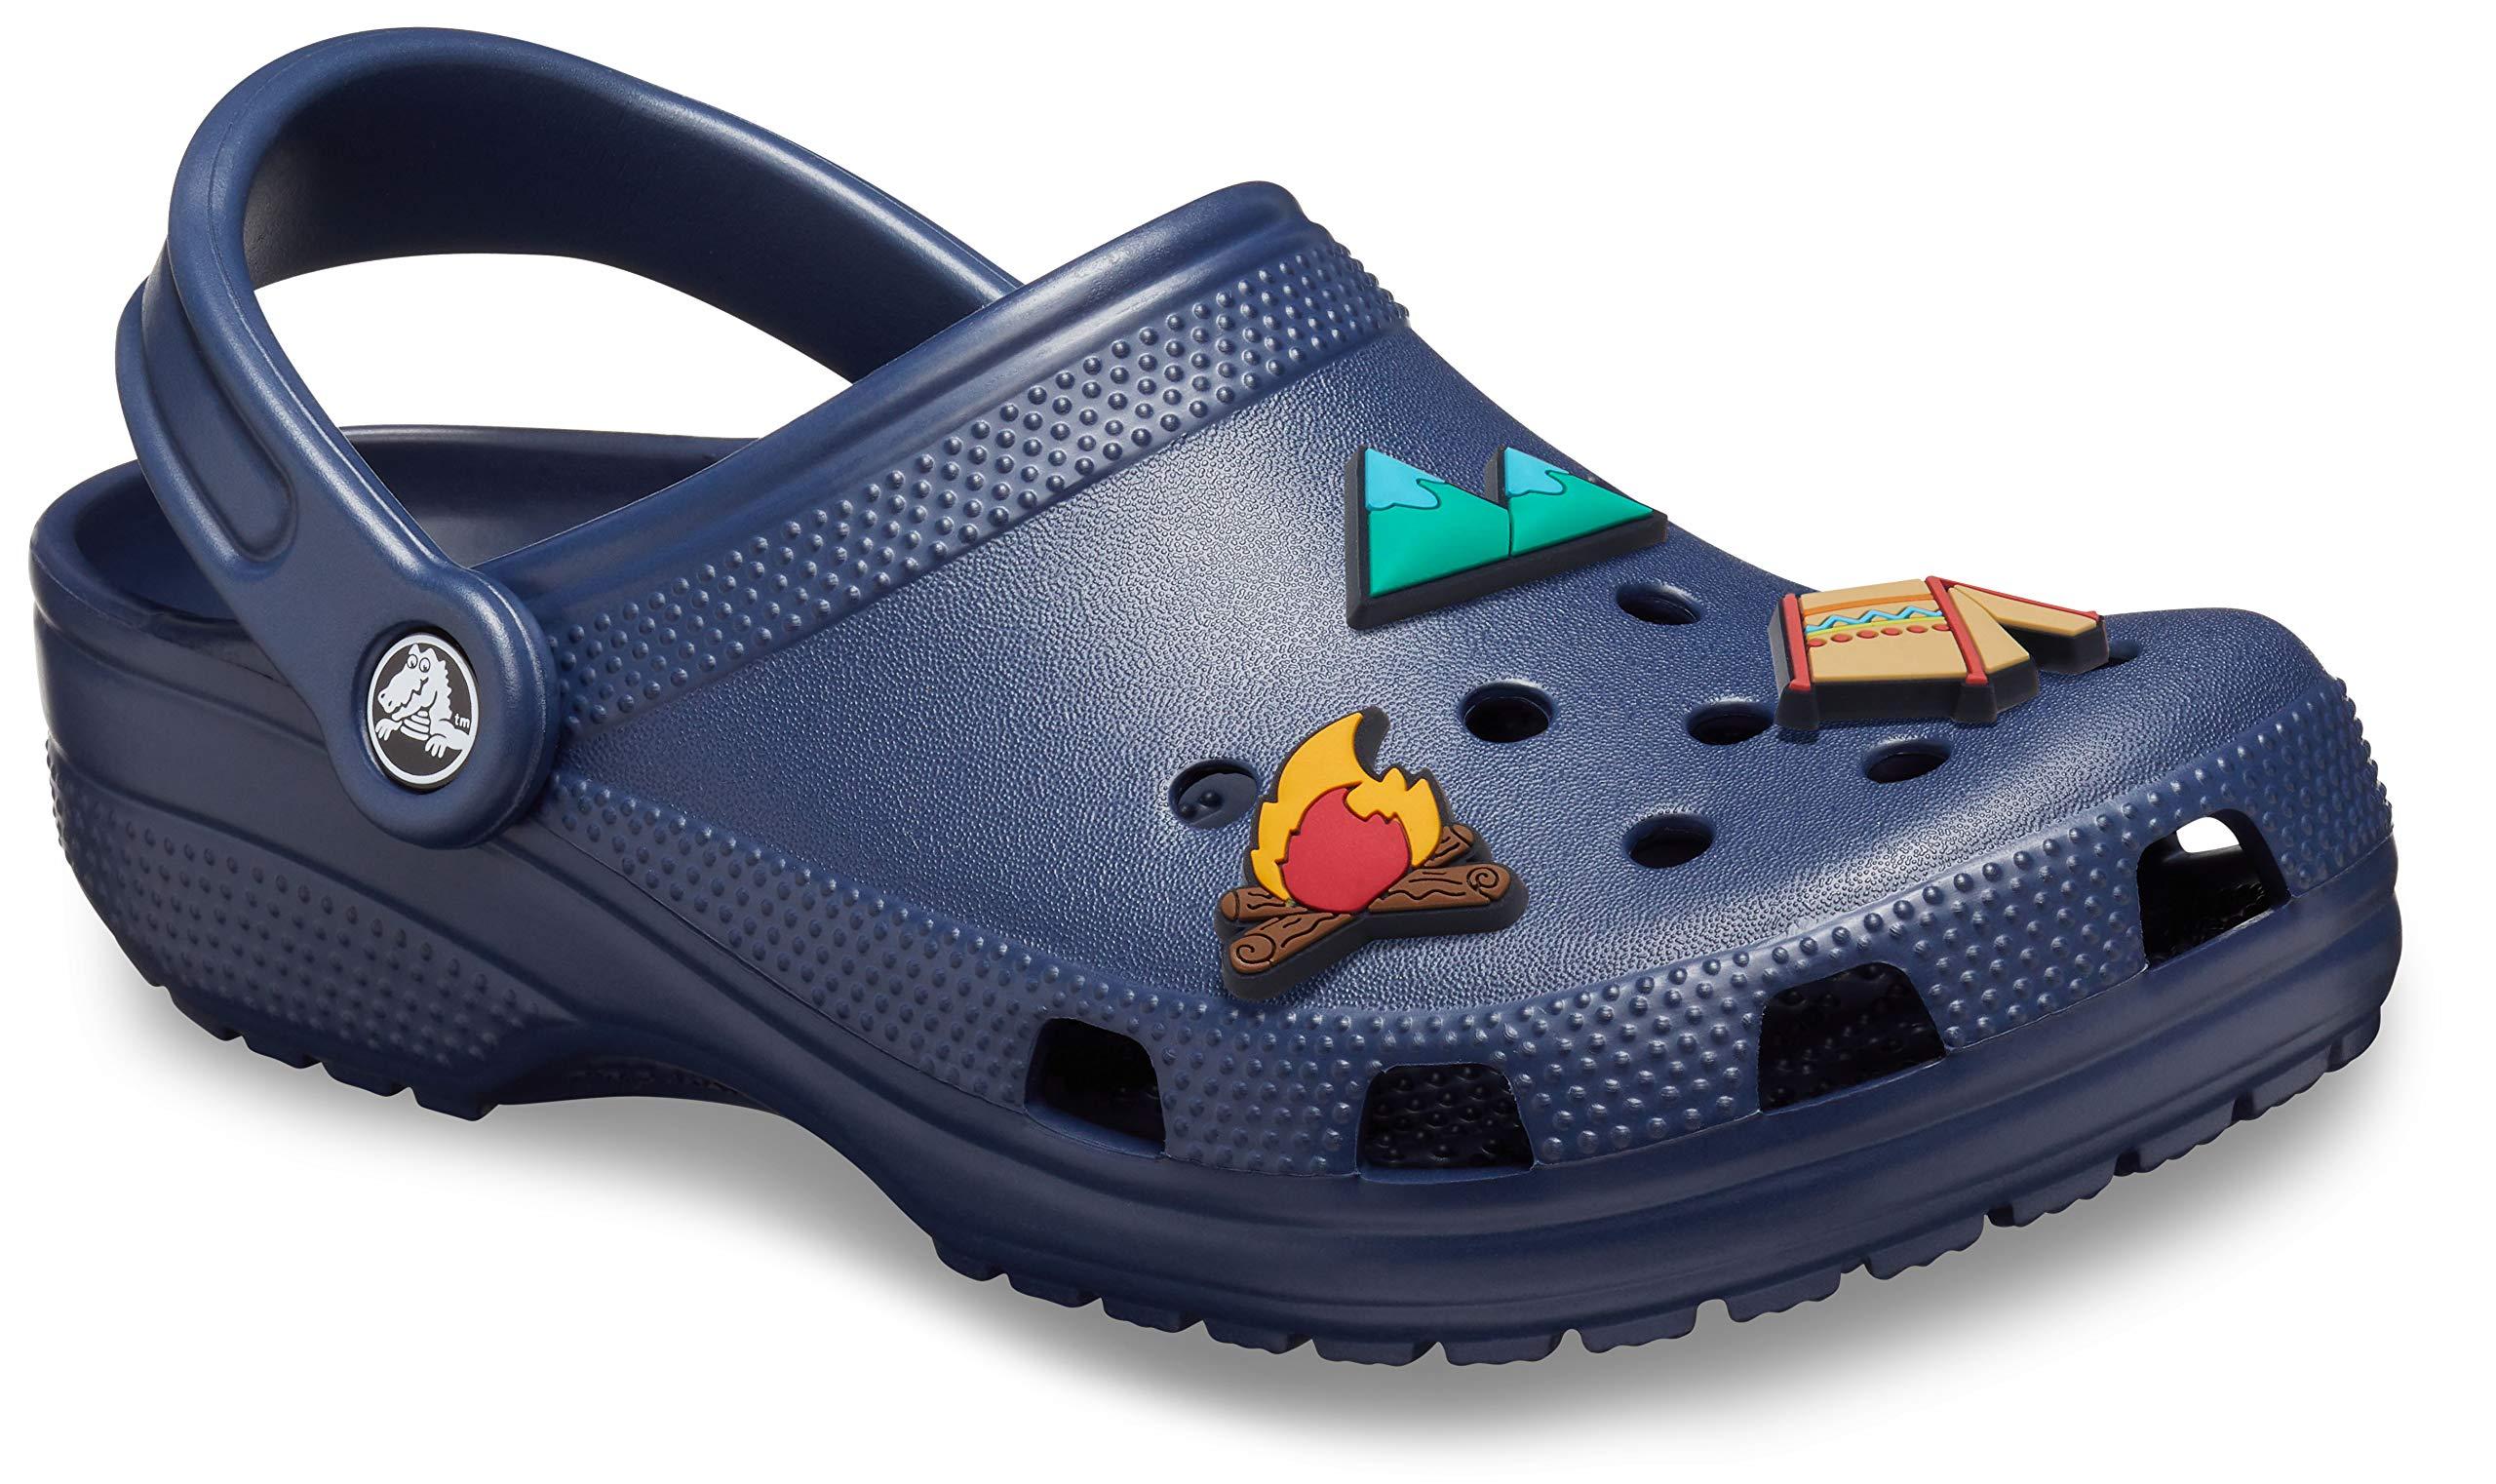  Crocs   Classic Clog Comfortable Slip On Casual Water  